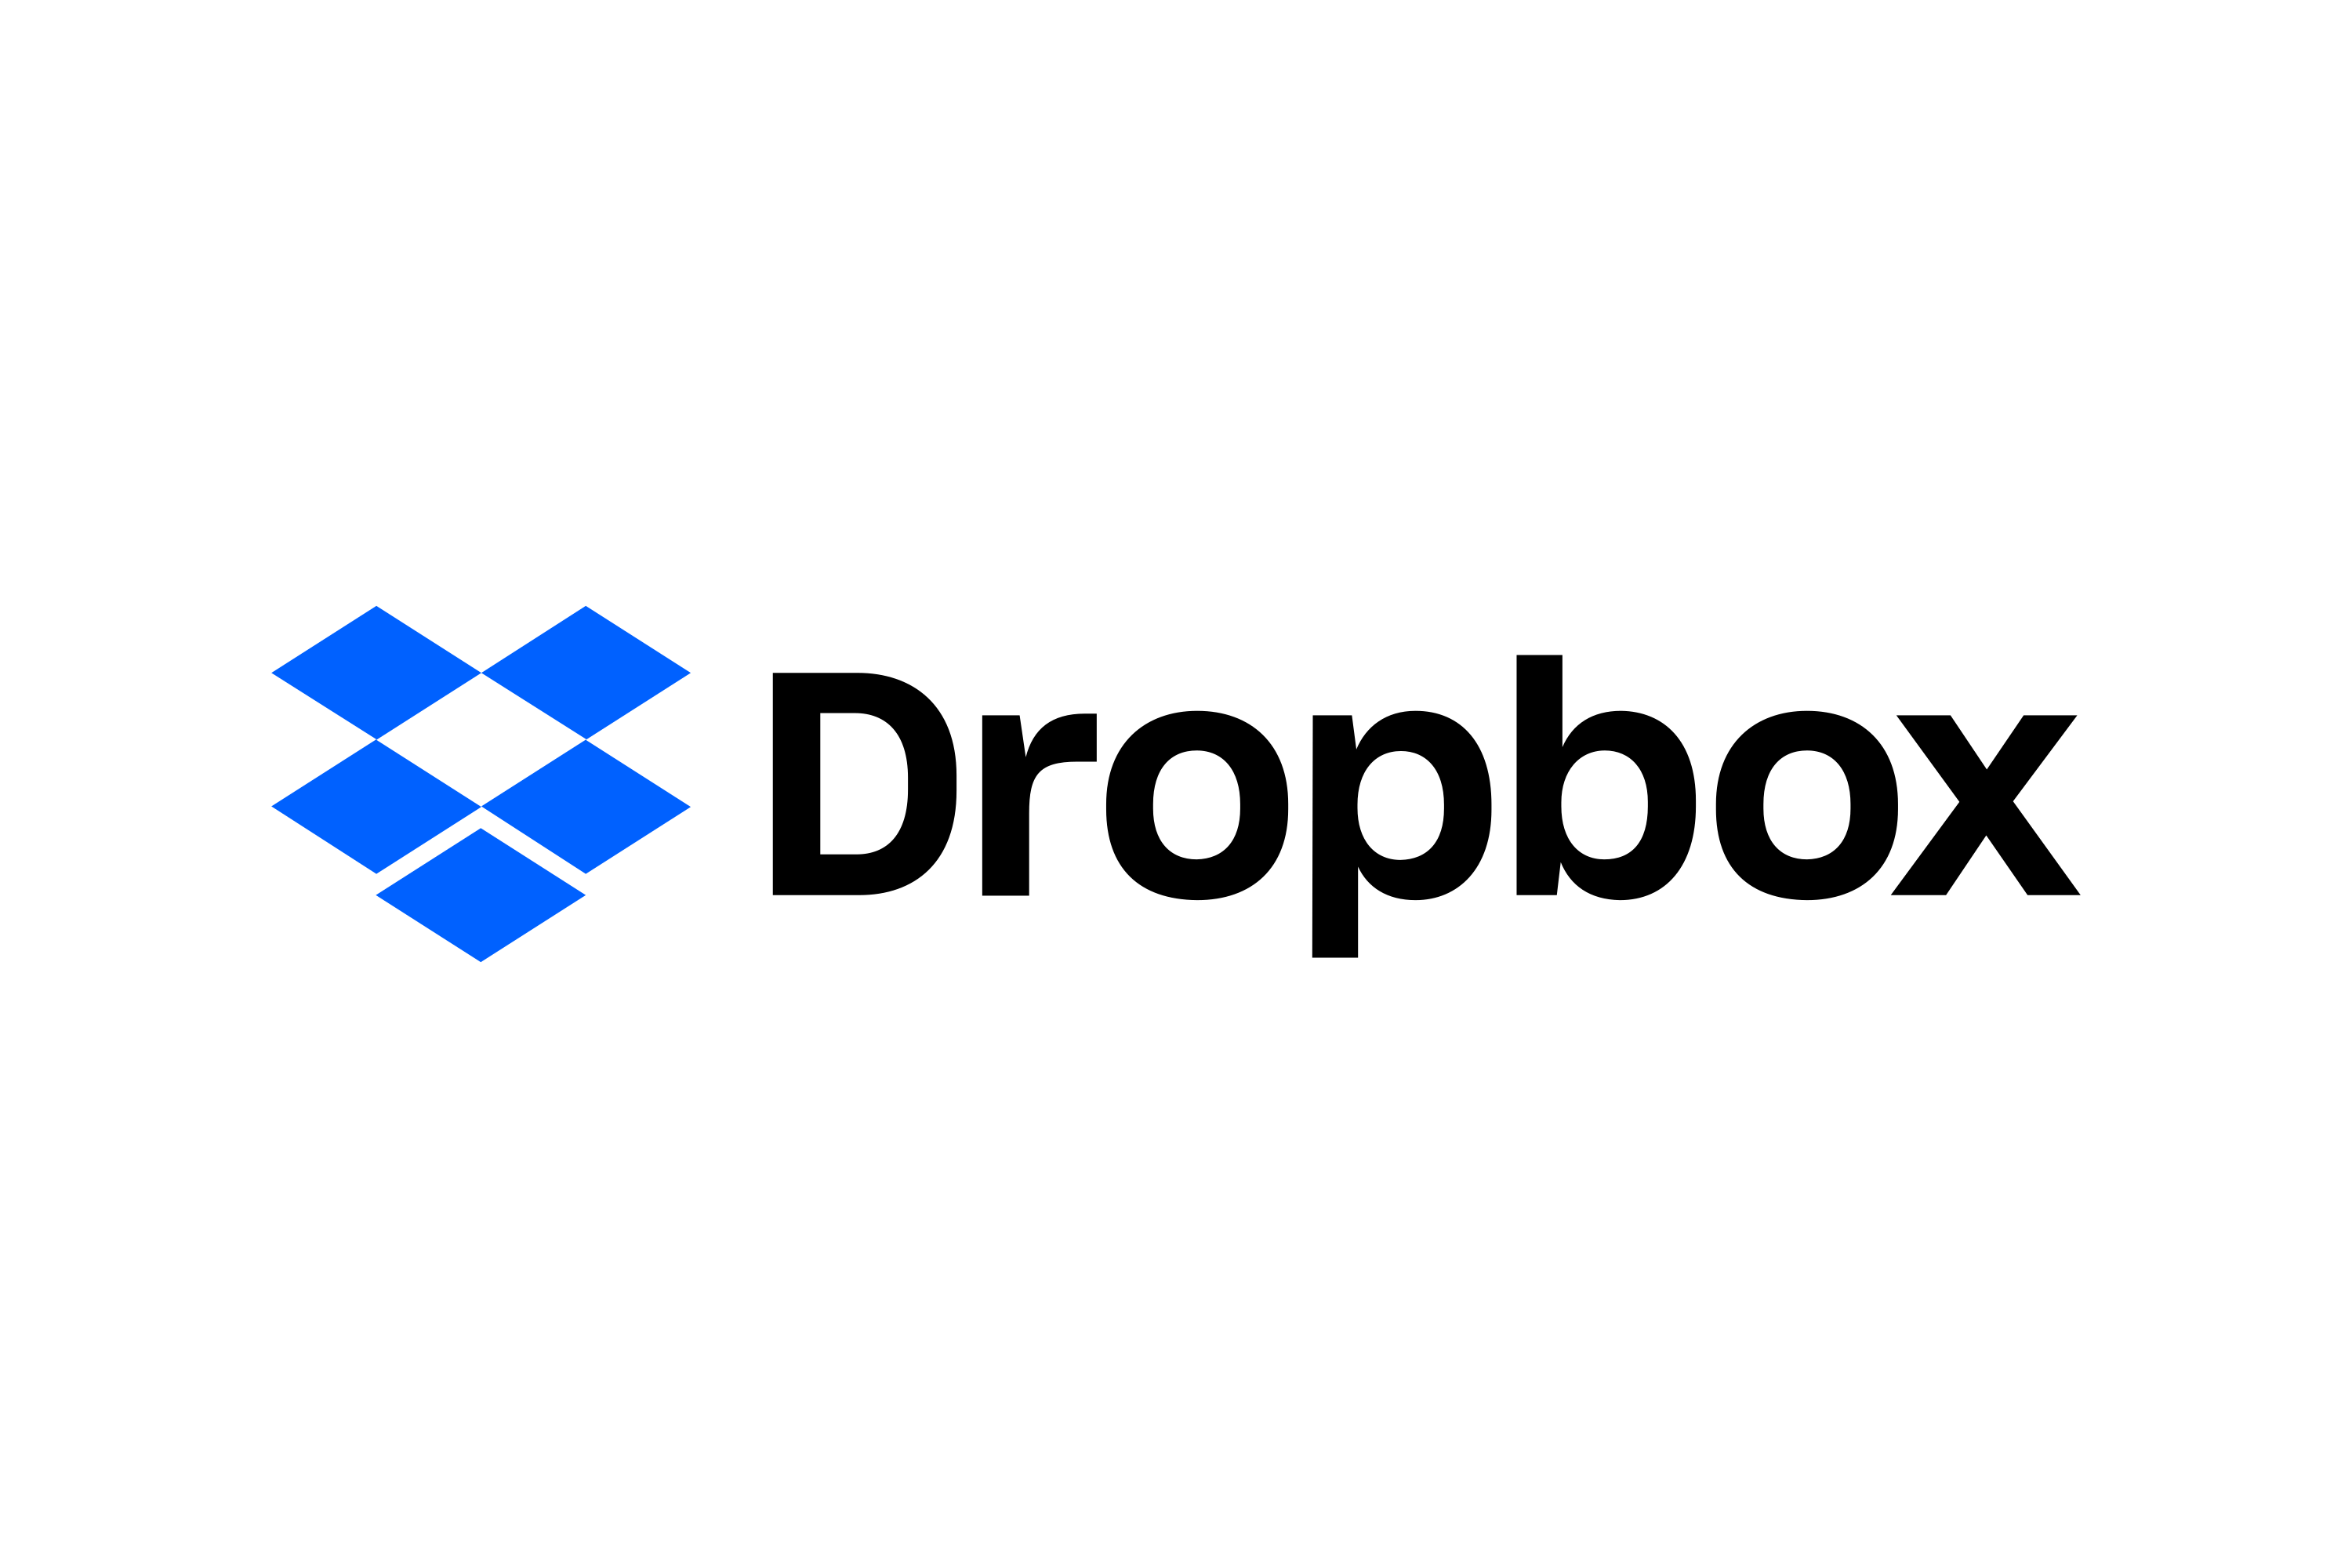 Download Dropbox Logo in SVG Vector or PNG File Format - Logo.wine